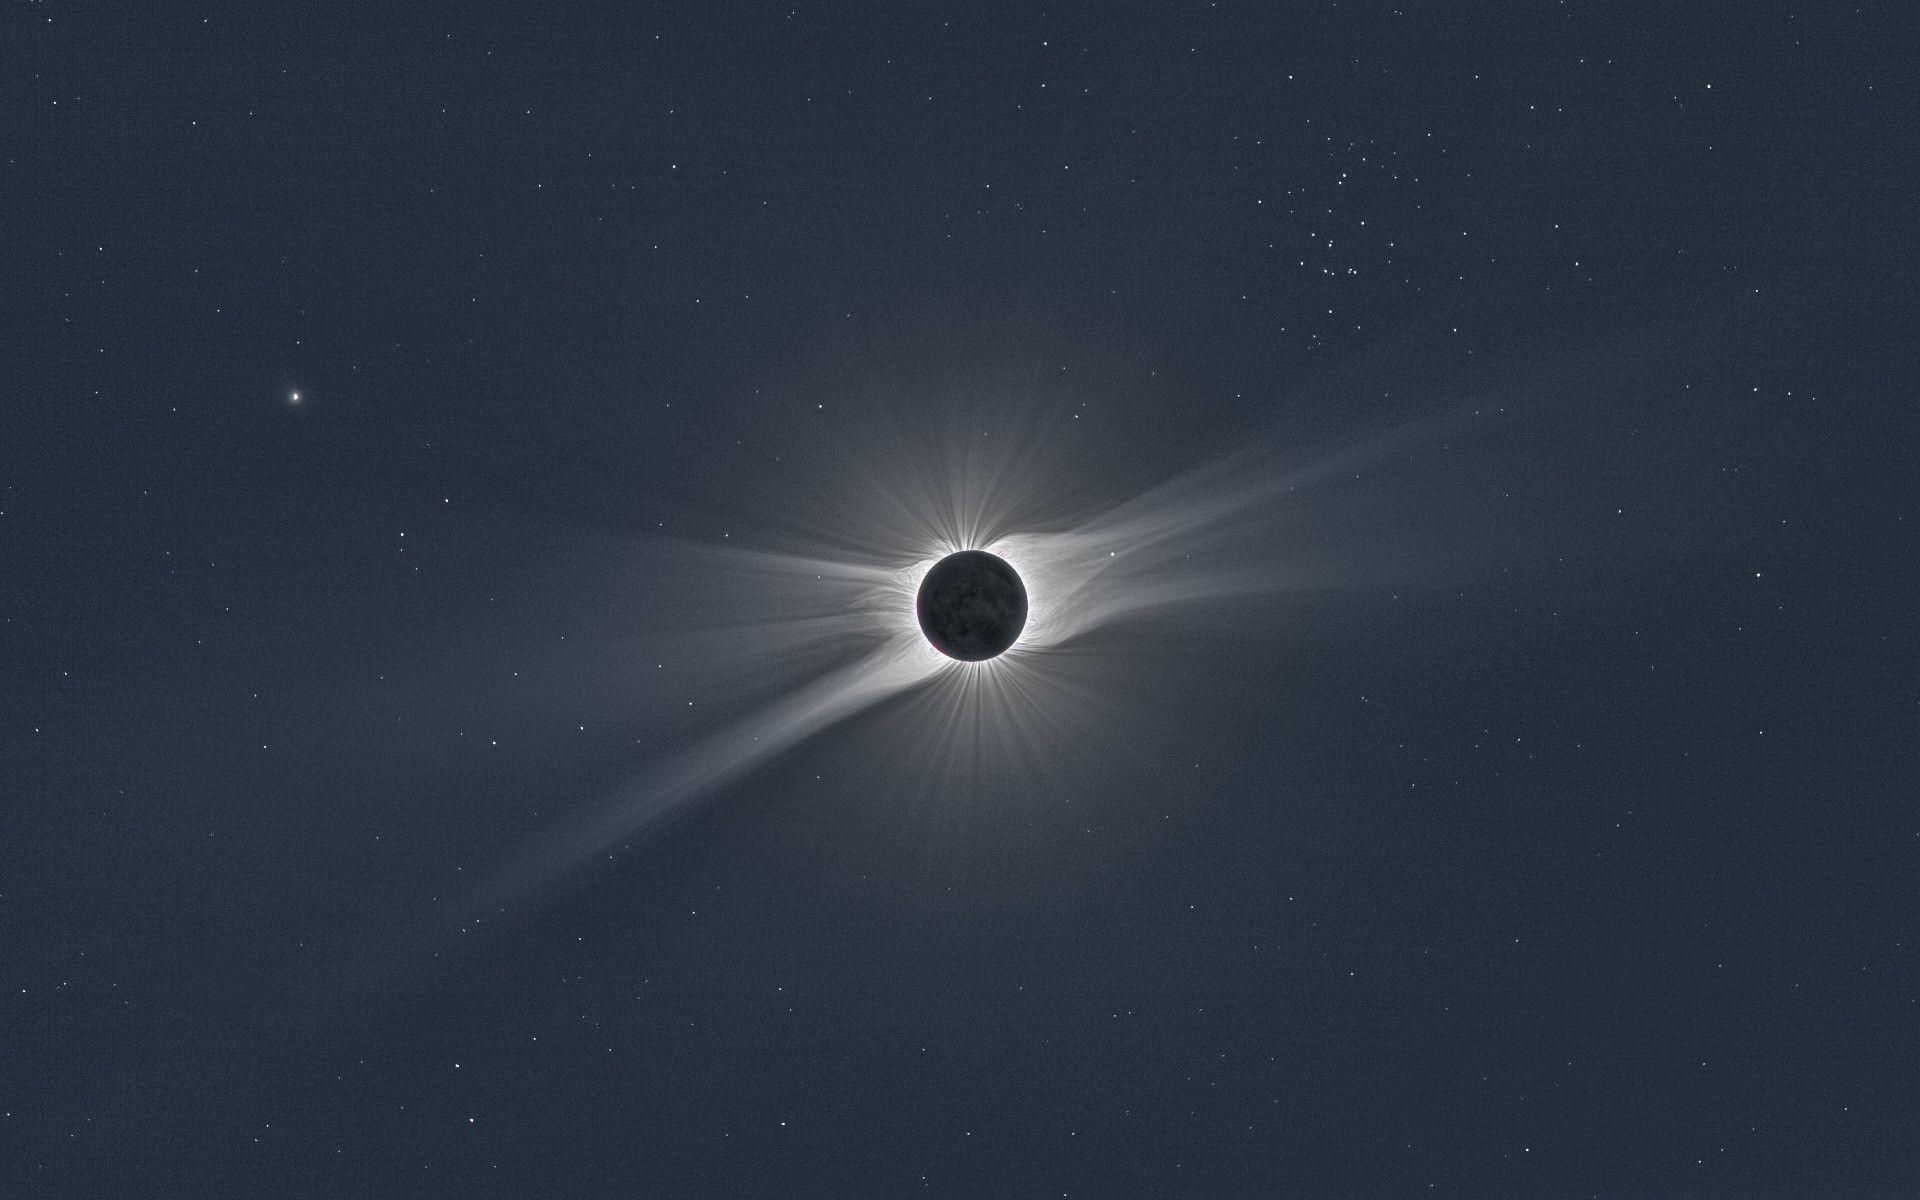 Earth Solar Eclipse Desktop Wallpapers